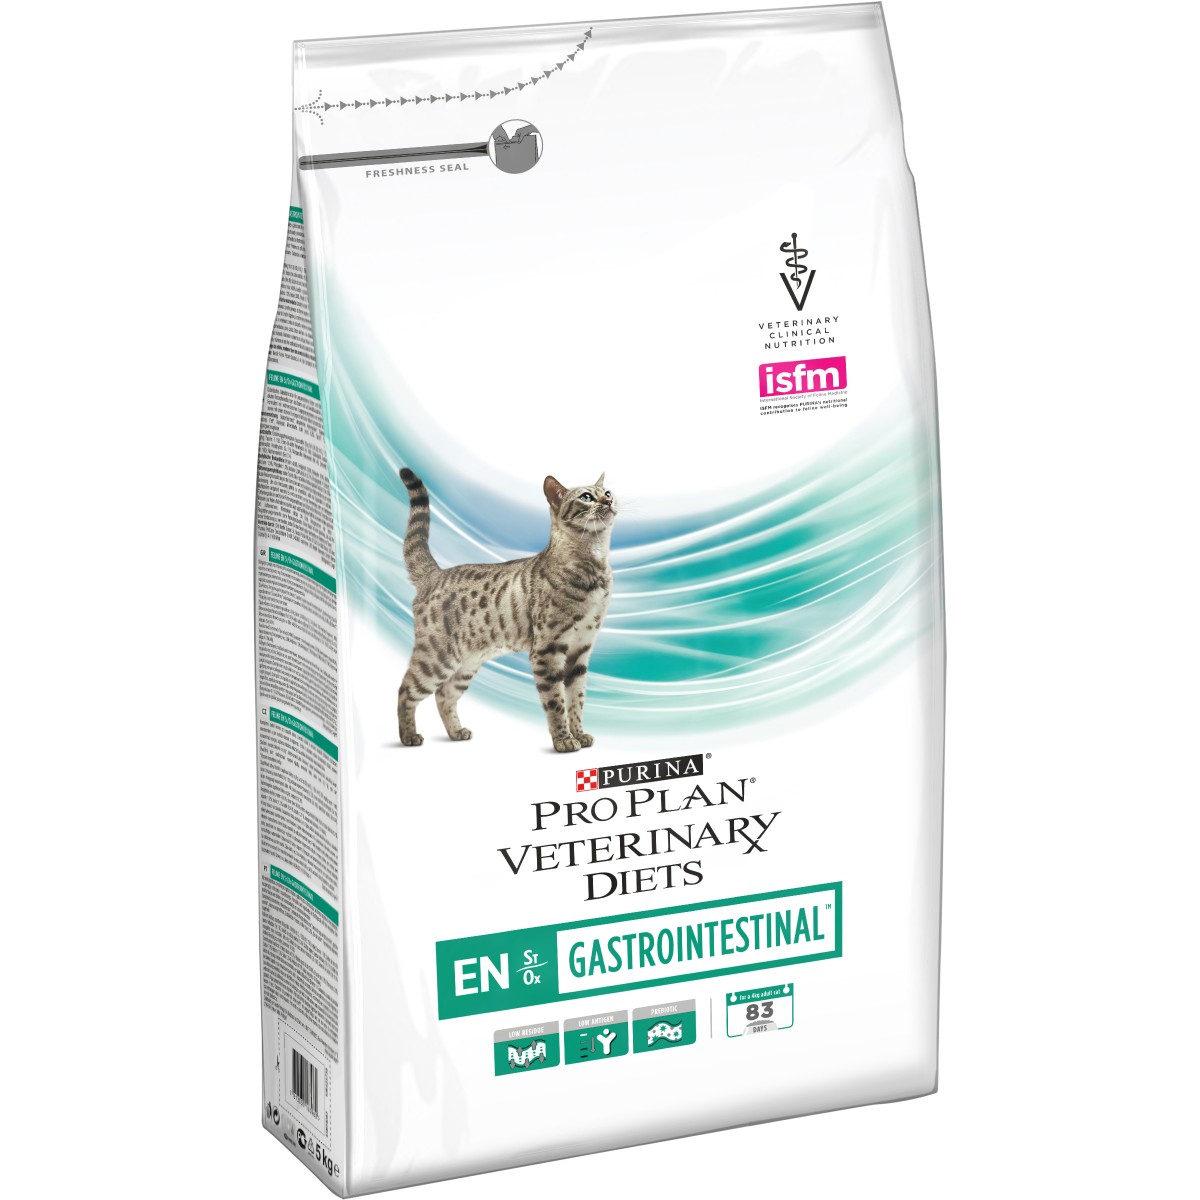 Purina Pro Plan Veterinary Diets Gastrointestinal для кошек. Пурина гастроинтестинал для собак. Purina Pro Plan Veterinary Diets Pouch en St/Ox Gastrointestinal с курицей, 85 гр консервы. Корм ppvd Feline en д/котов 1.5кг.